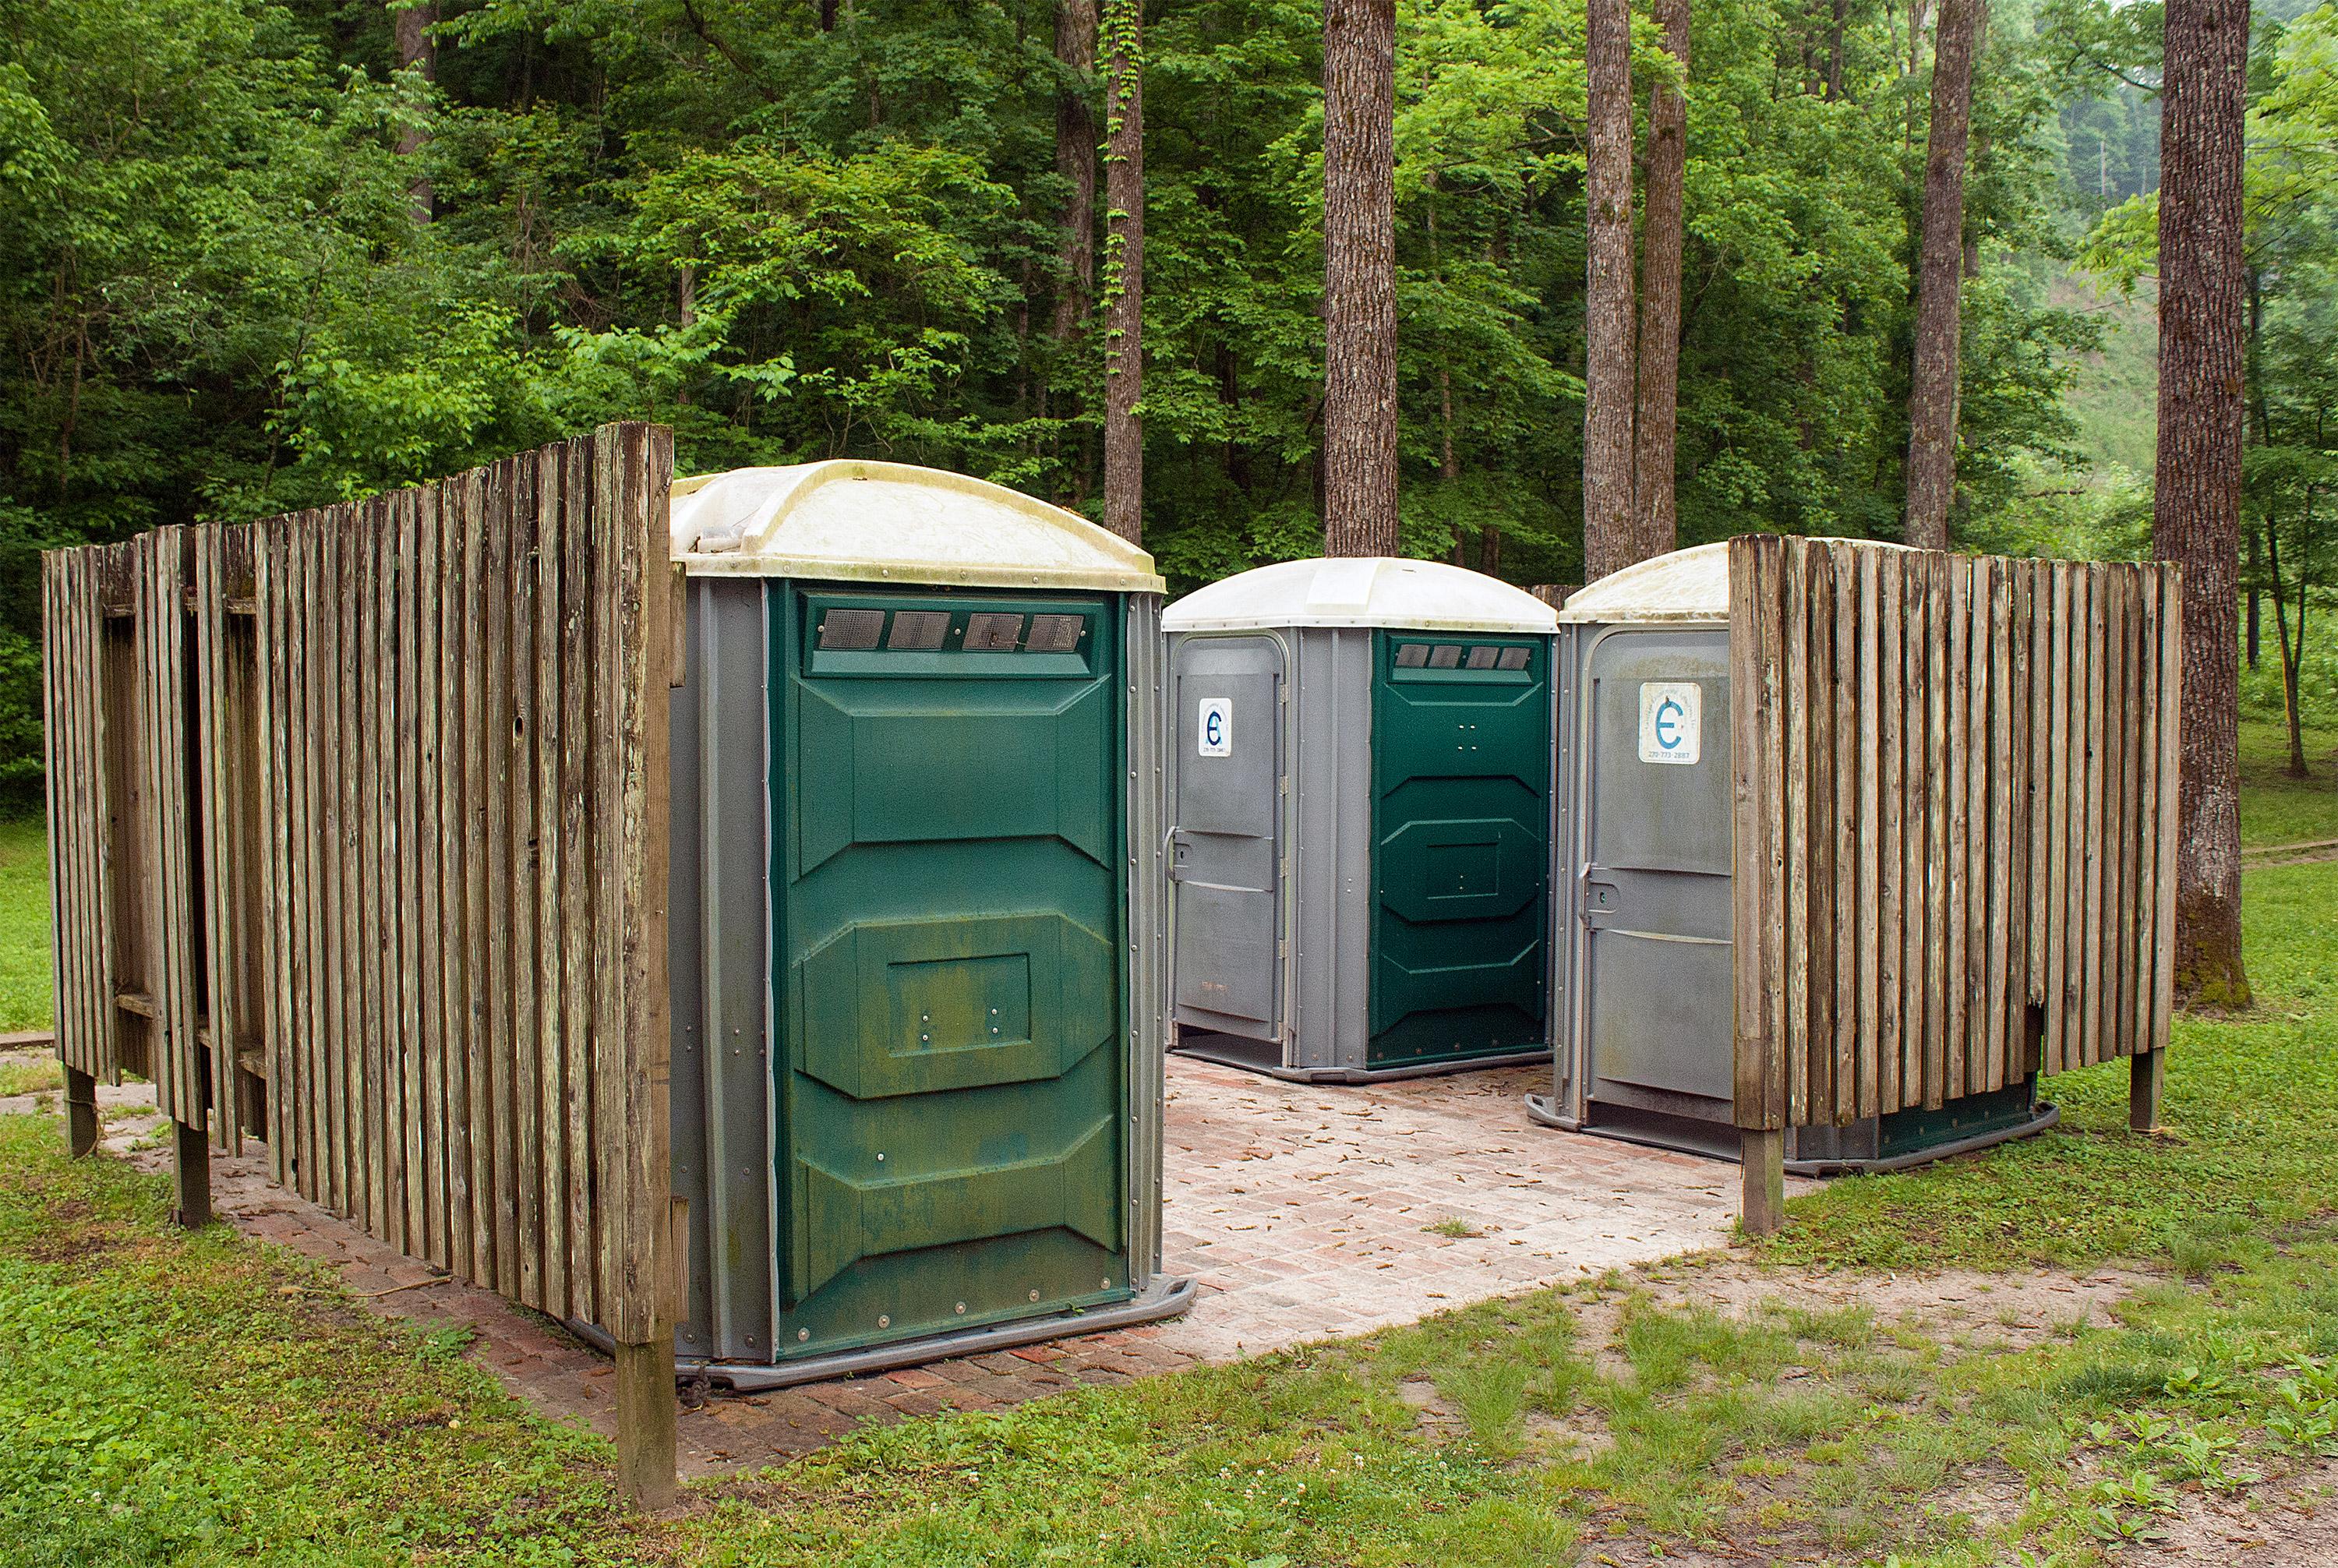 A wooden enclosure containing portable toilet facilities.